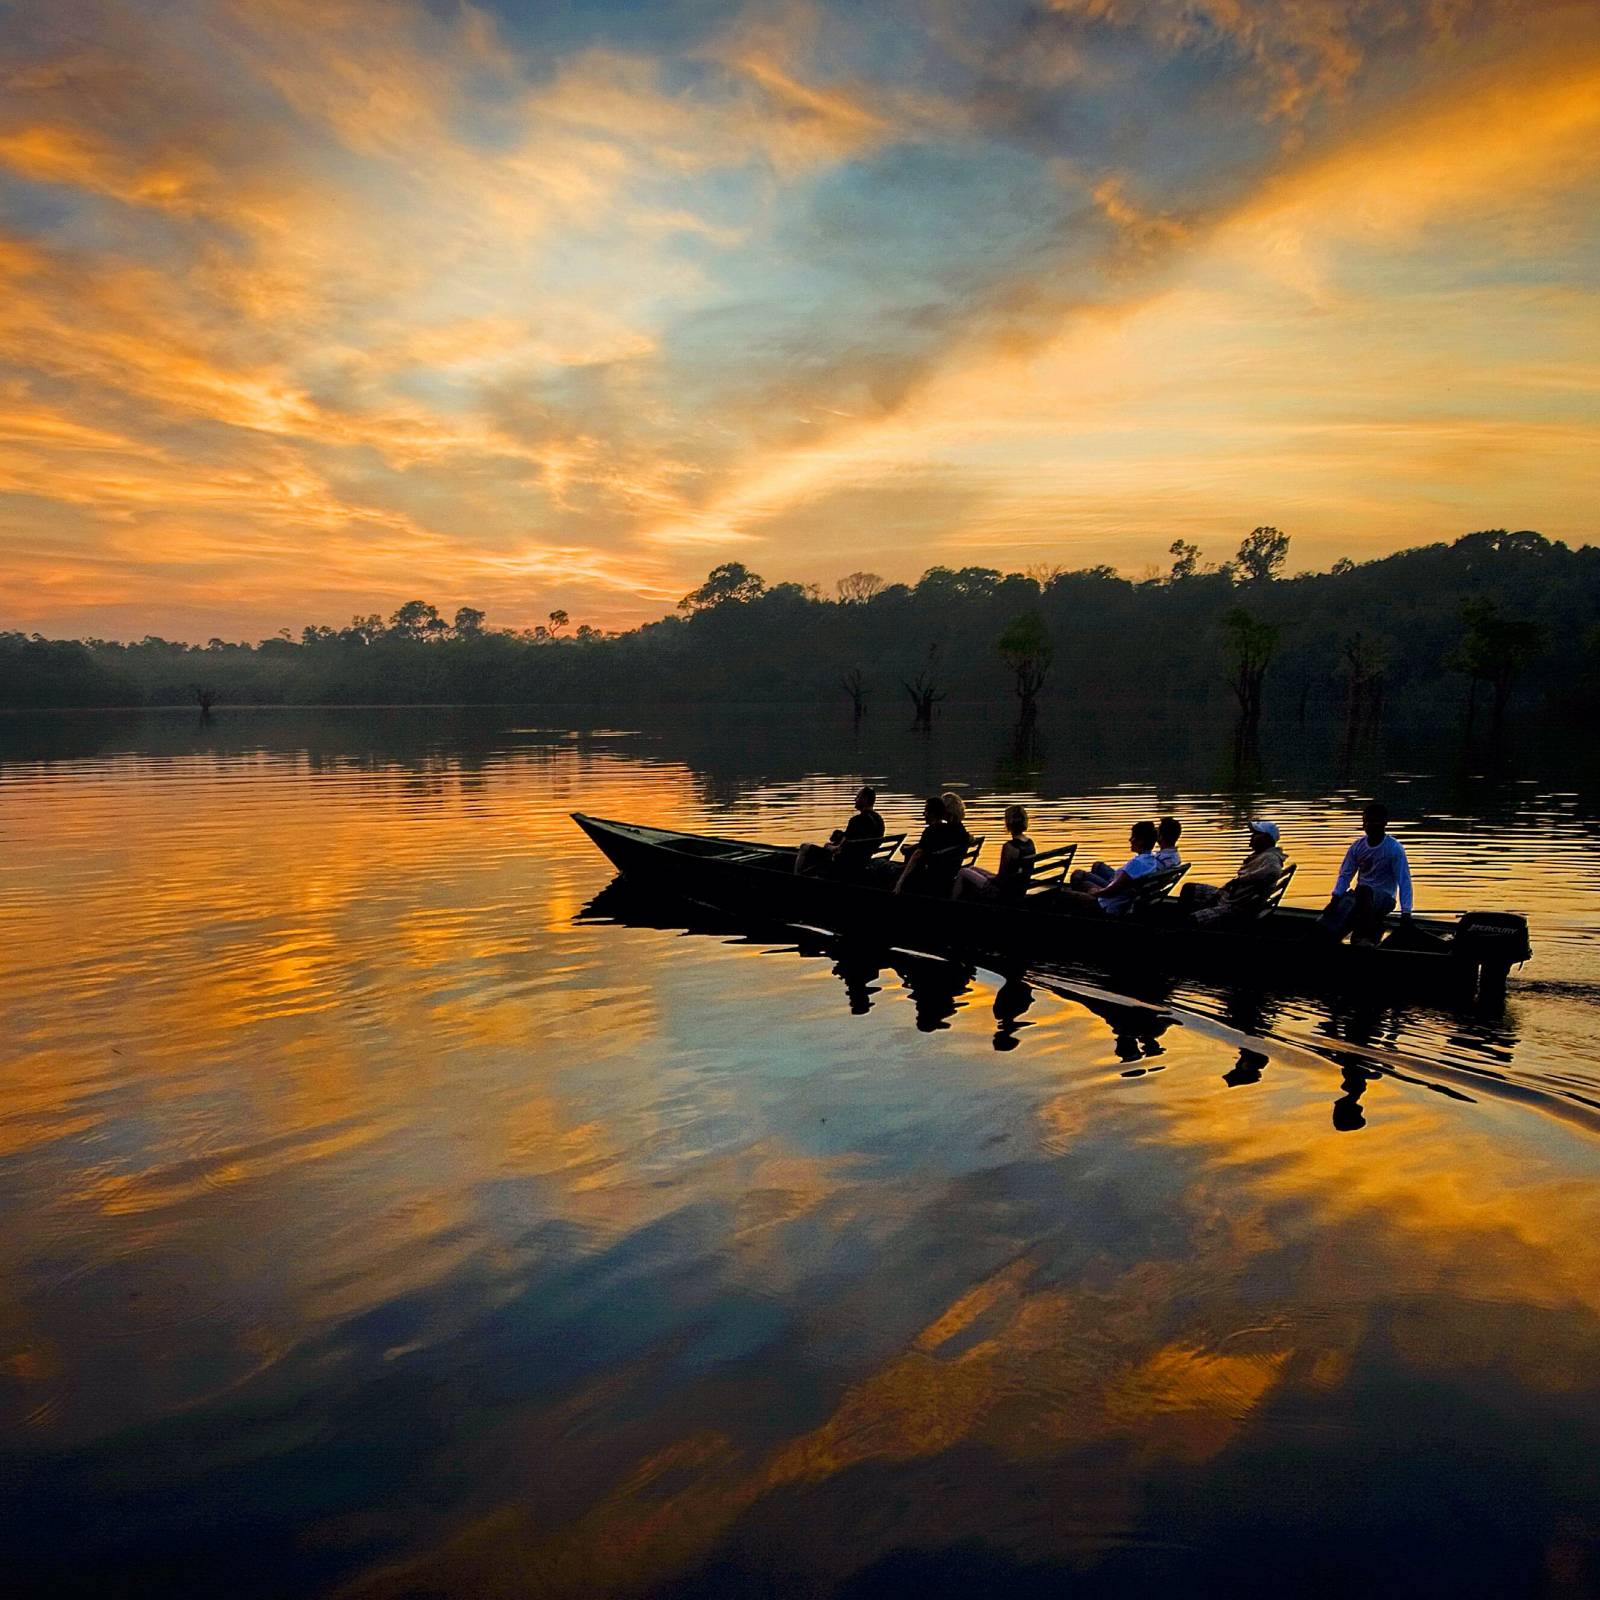 Amazzonia brasiliana. Foto di Francesco Tomasinelli/Touring ottobre 2014